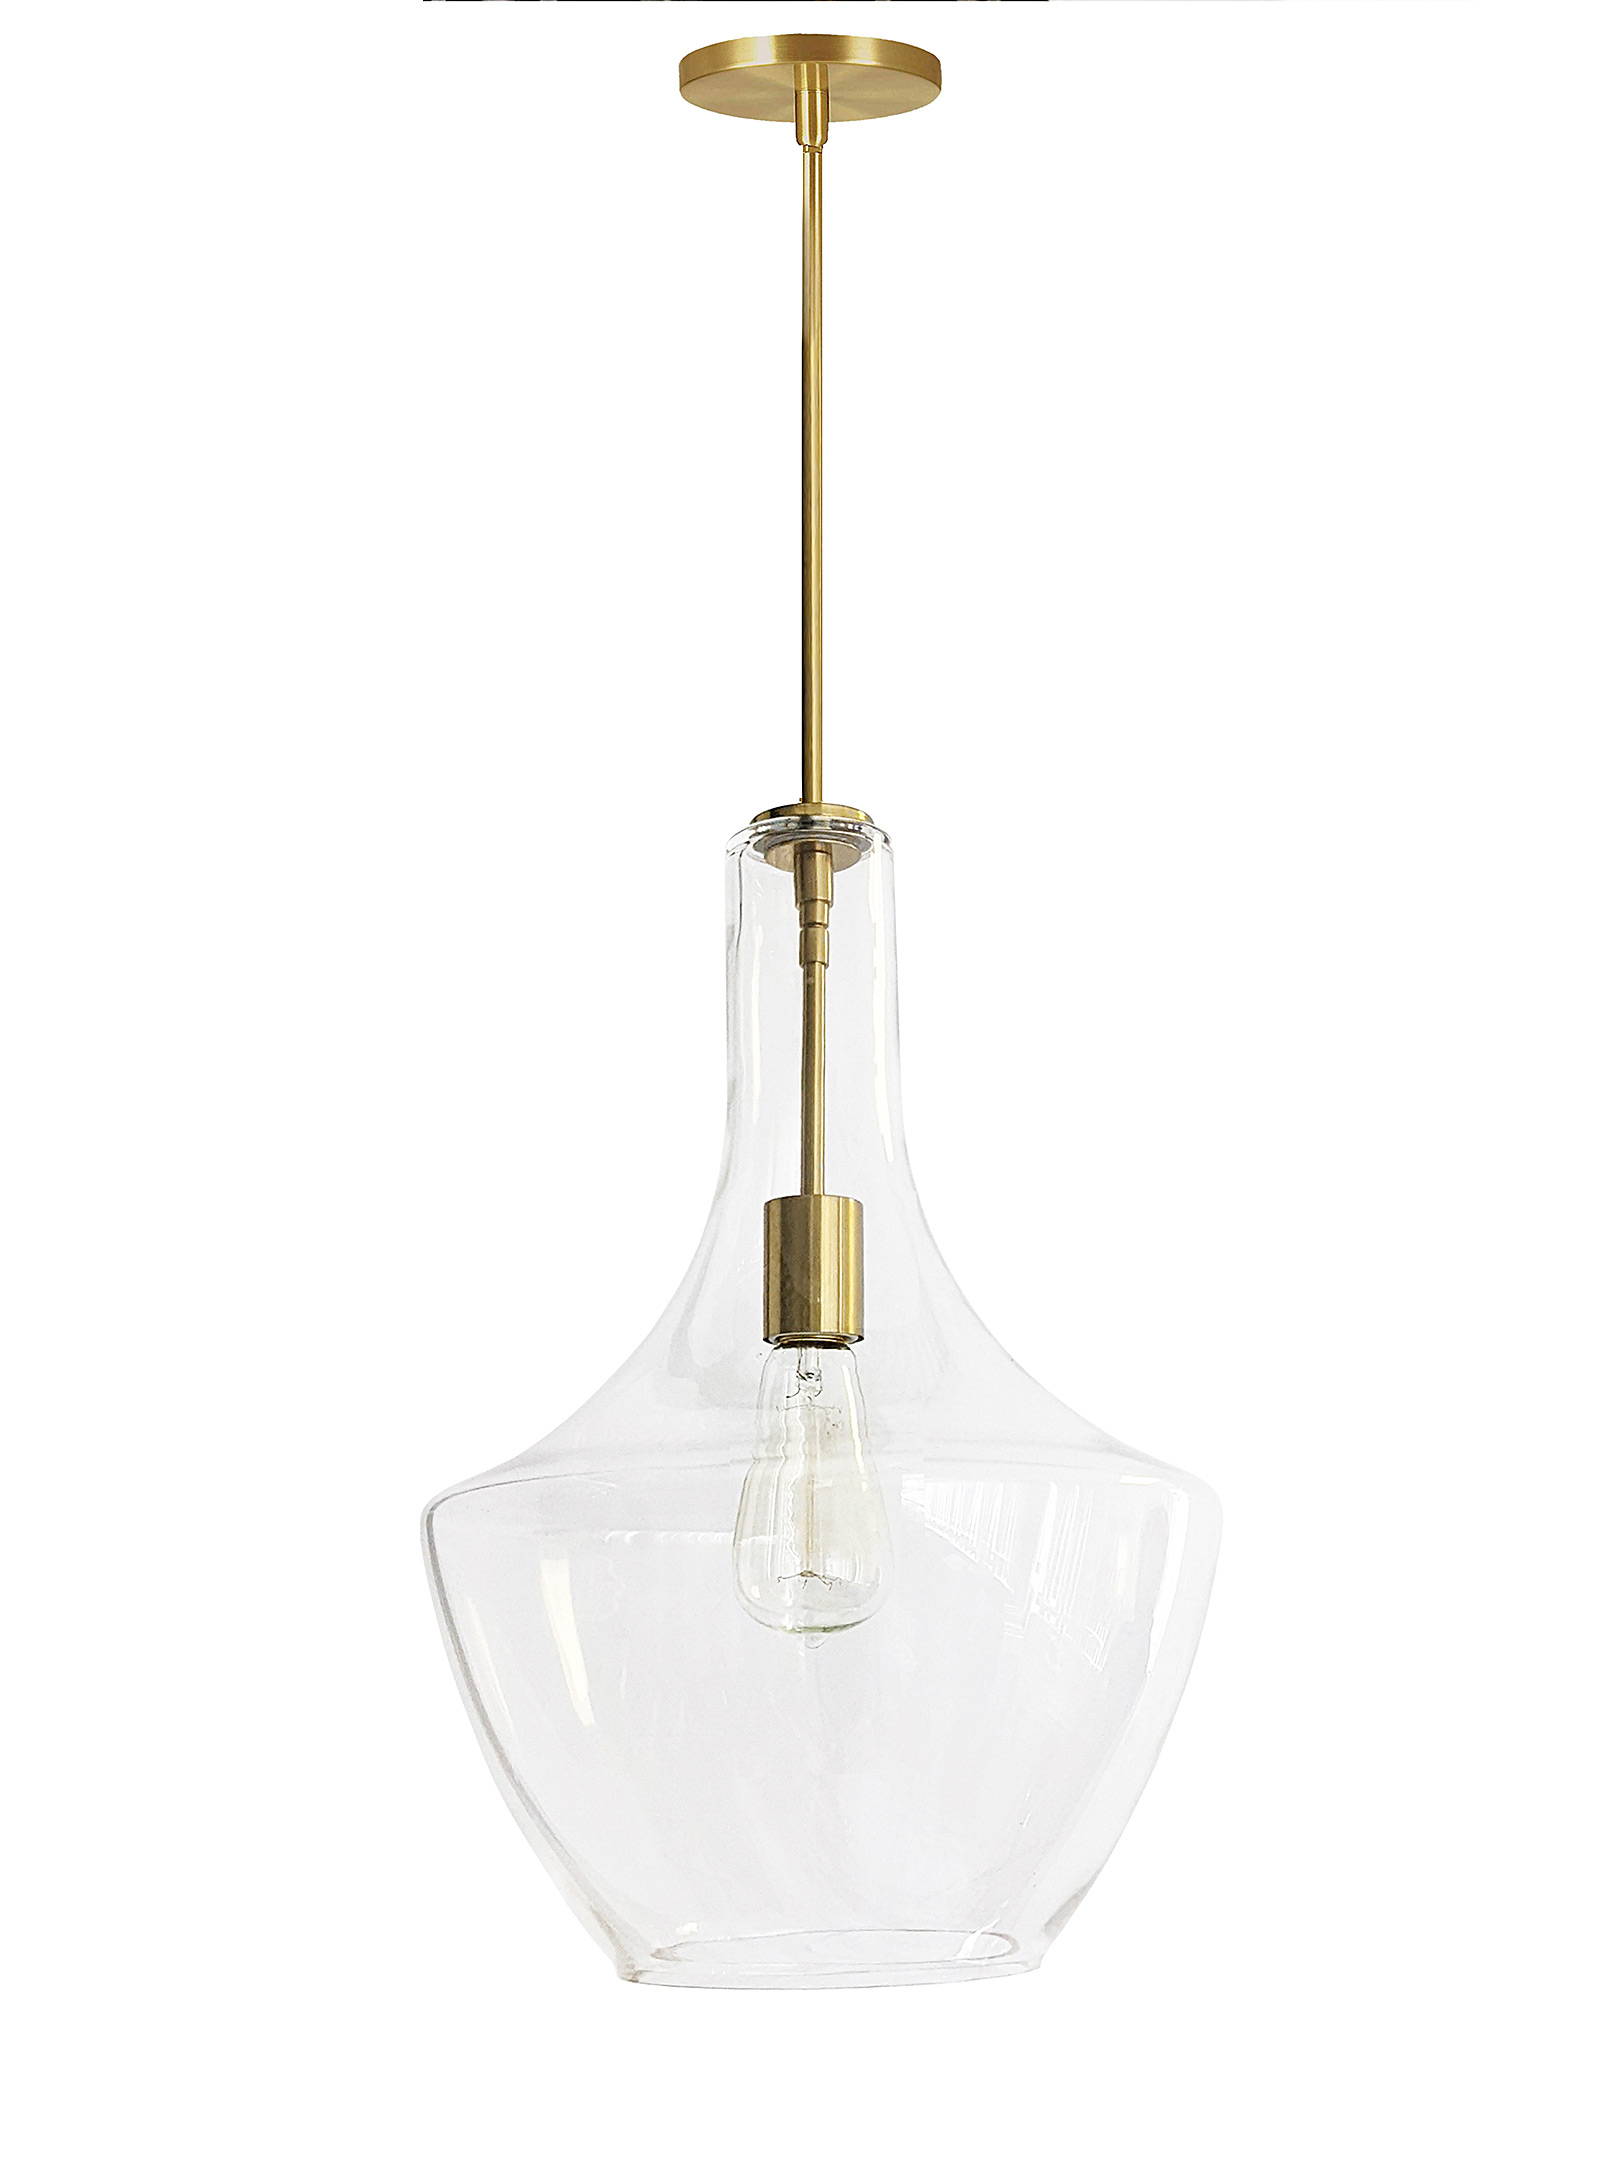 Simons Maison Golden Crystalline Structure Hanging Lamp In Multi